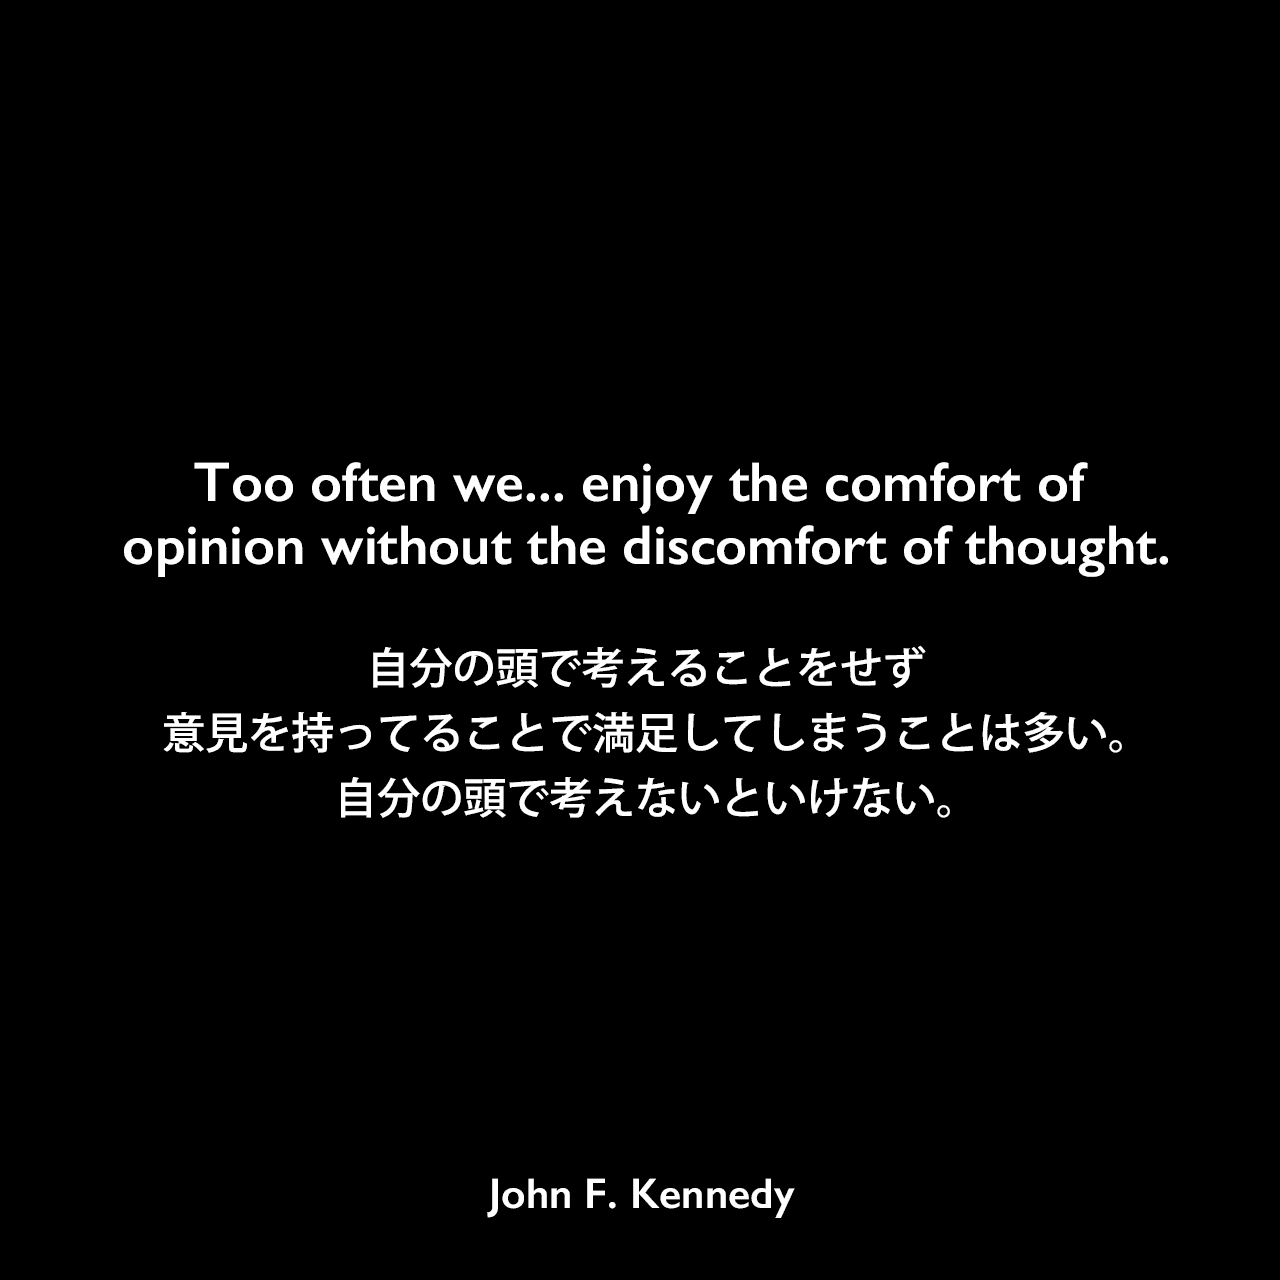 Too often we... enjoy the comfort of opinion without the discomfort of thought.自分の頭で考えることをせず、意見を持ってることで満足してしまうことは多い。自分の頭で考えないといけない。- イエール大学での卒業式演説よりJohn F Kennedy